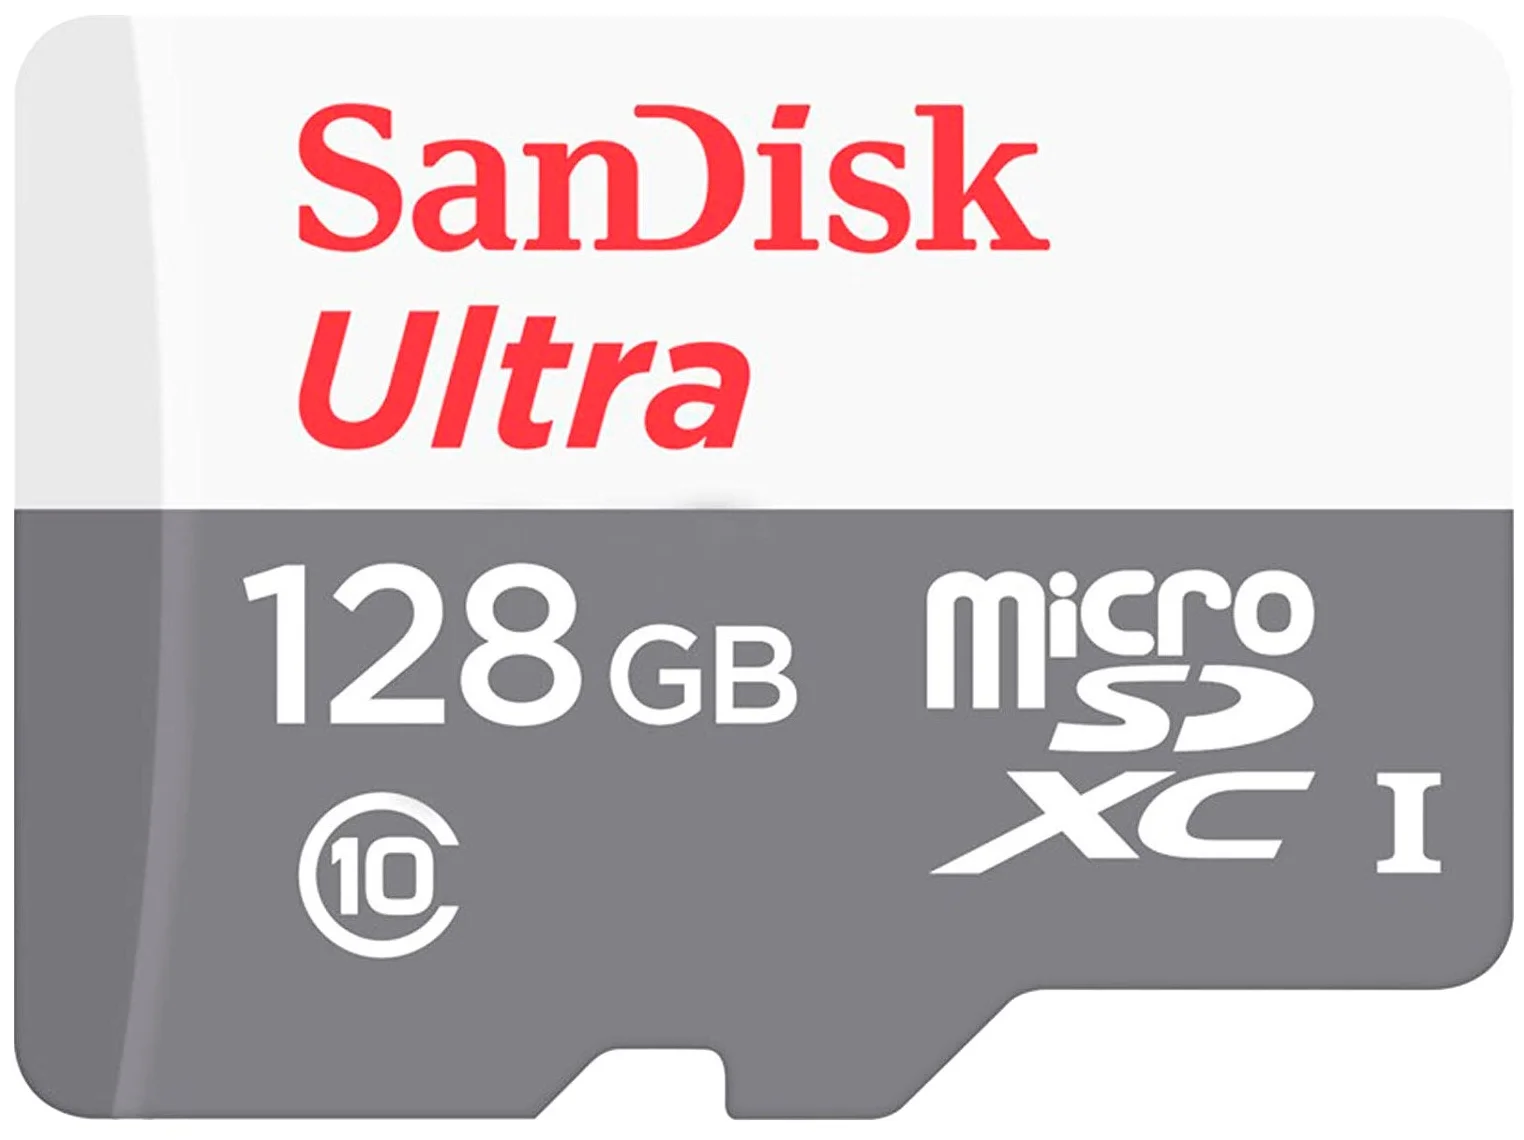 SanDisk Ultra microSDXC Class 10 UHS-I 80MB/s - класс скорости: Class 10